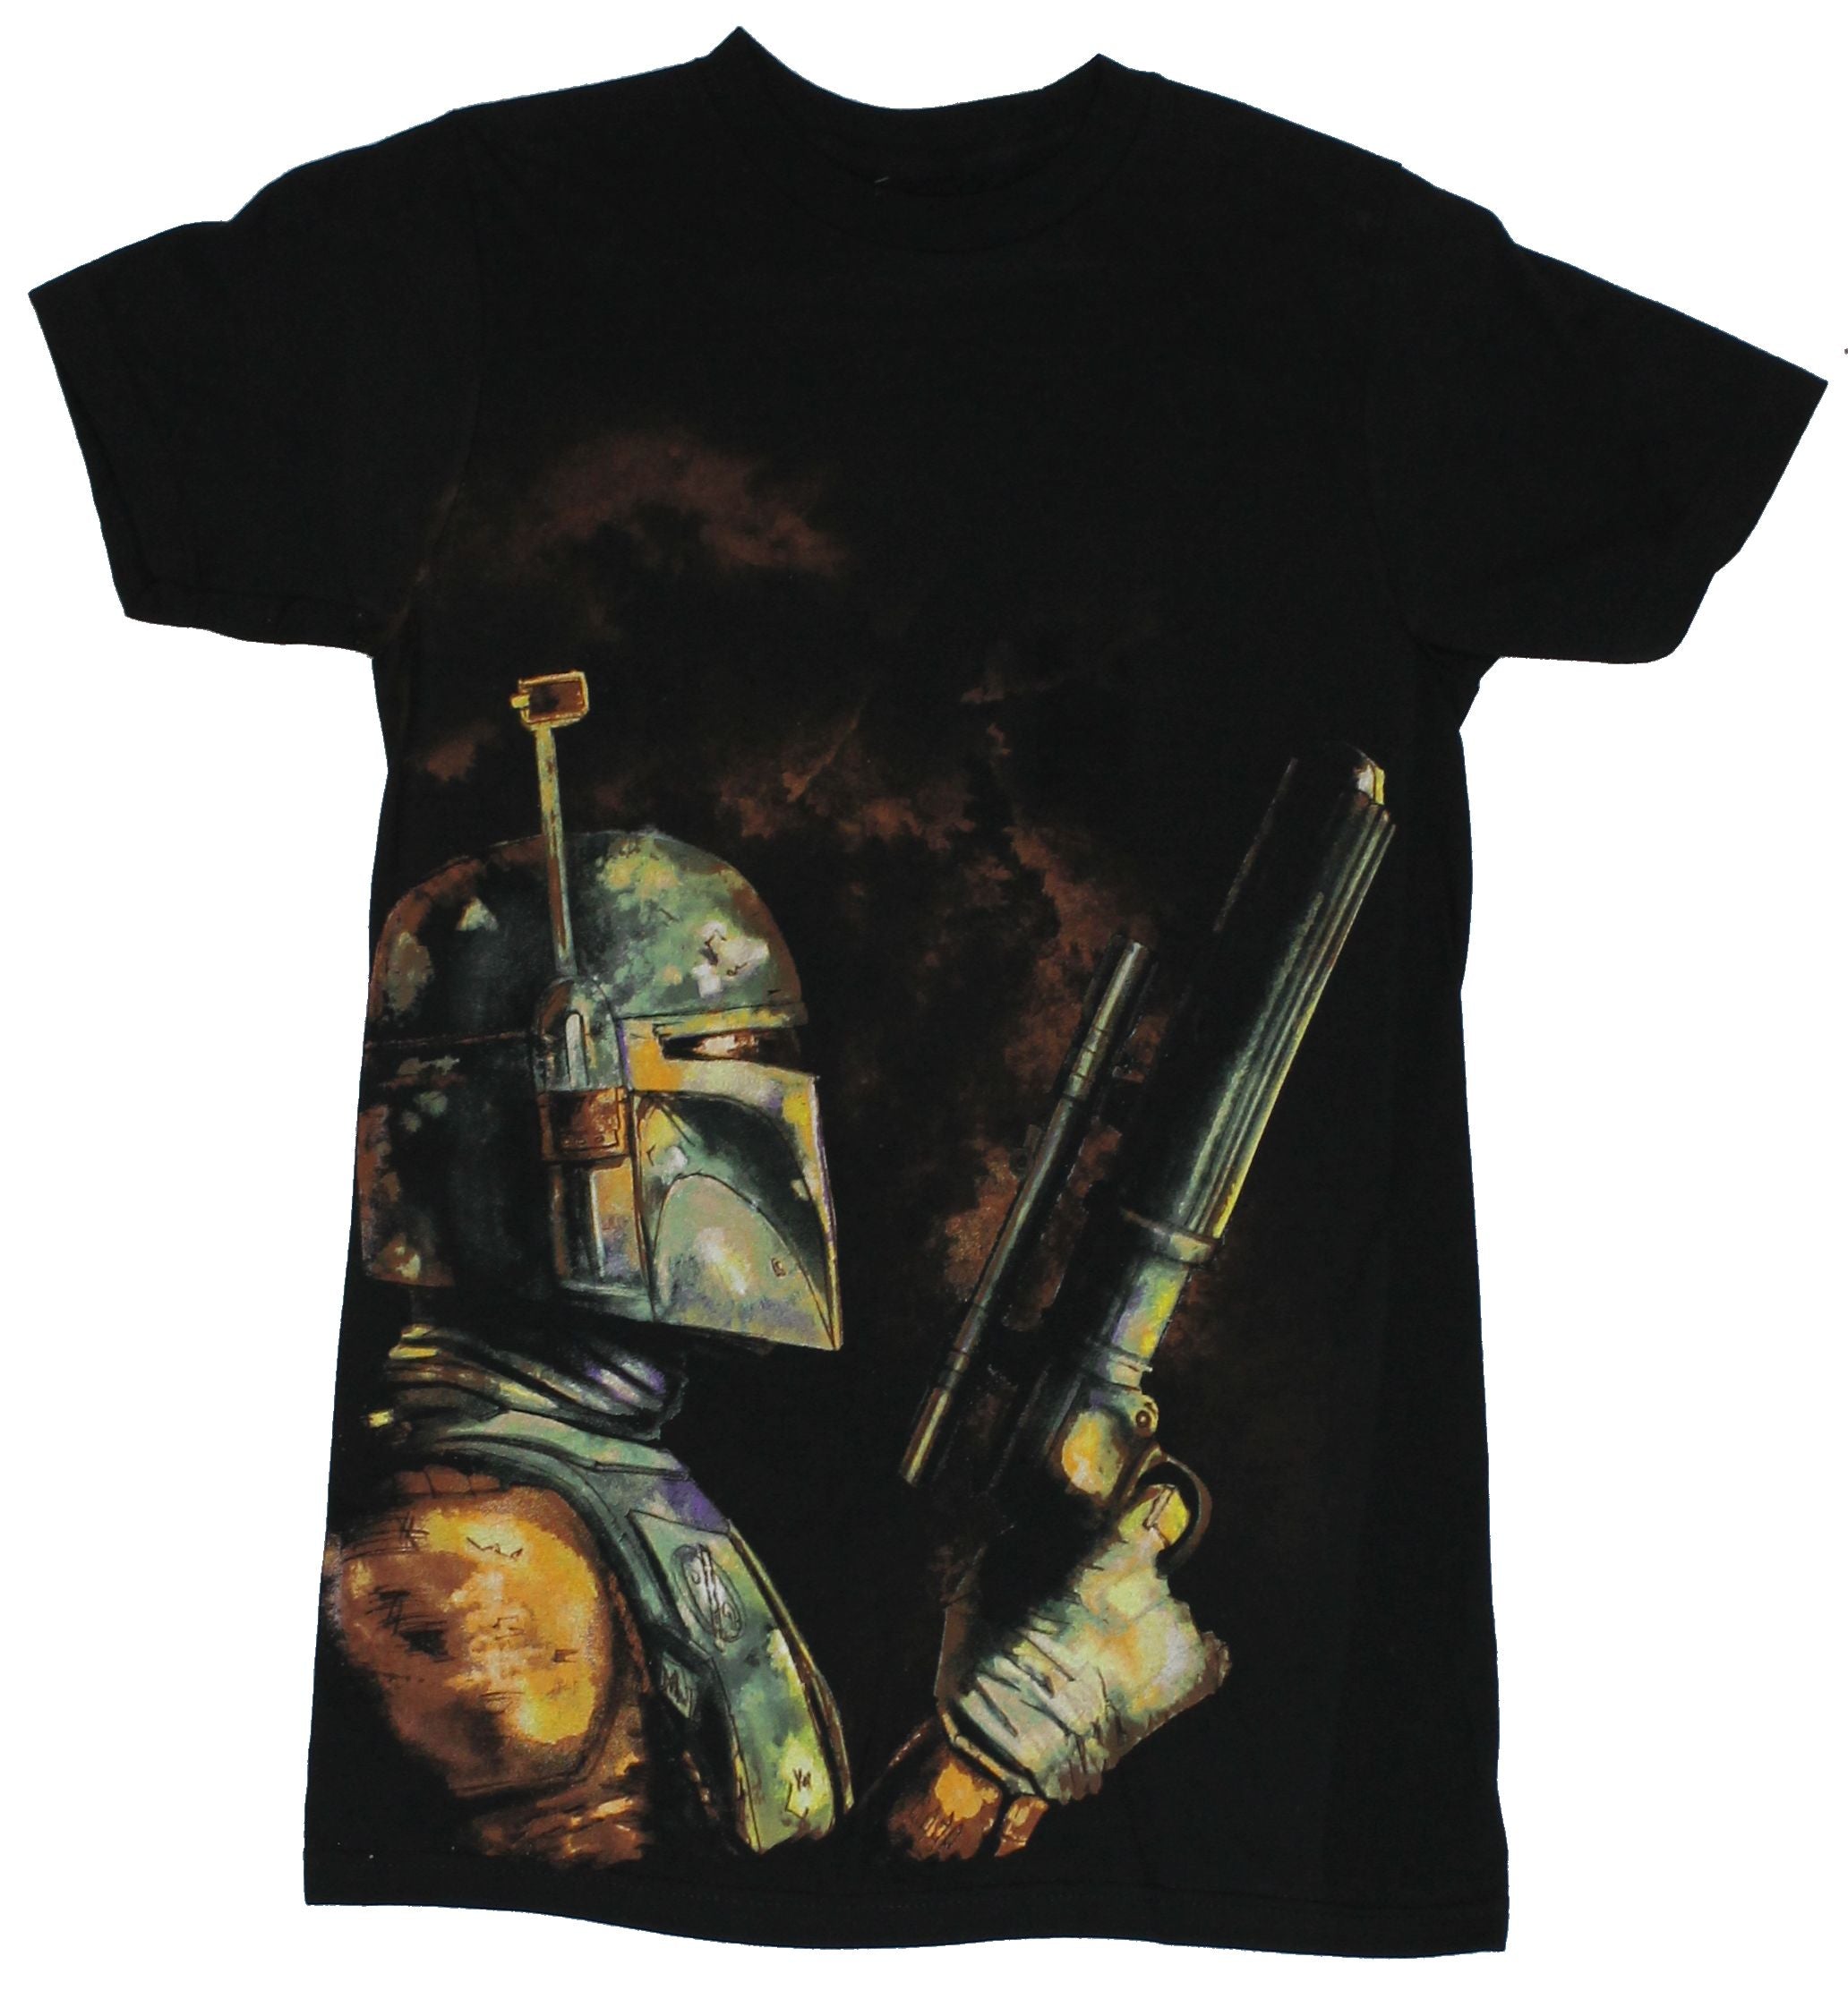 Star Wars Mens T-Shirt - Boba Fett Large Gun Pose Image